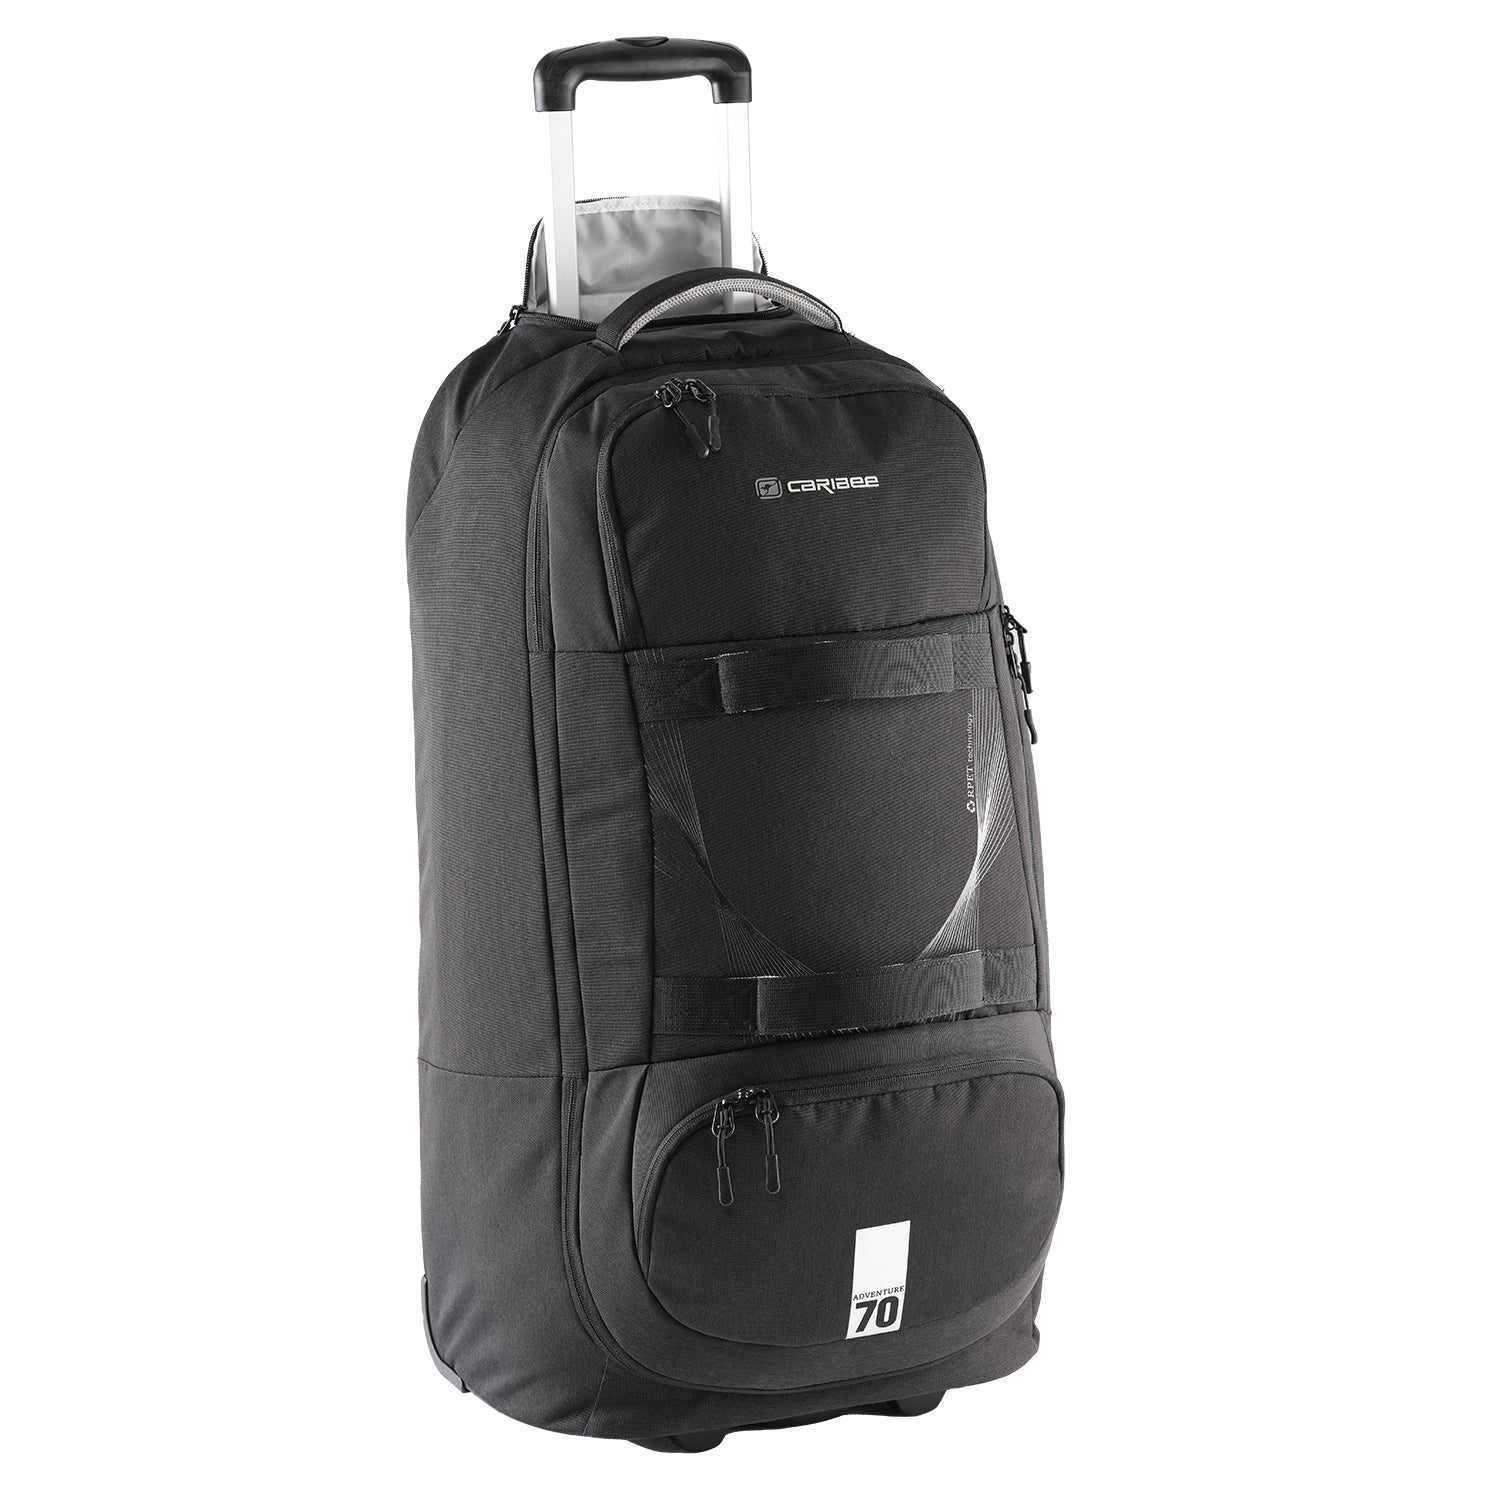 Caribee- Adventure 70L Duffle w Backpack straps - Black-1